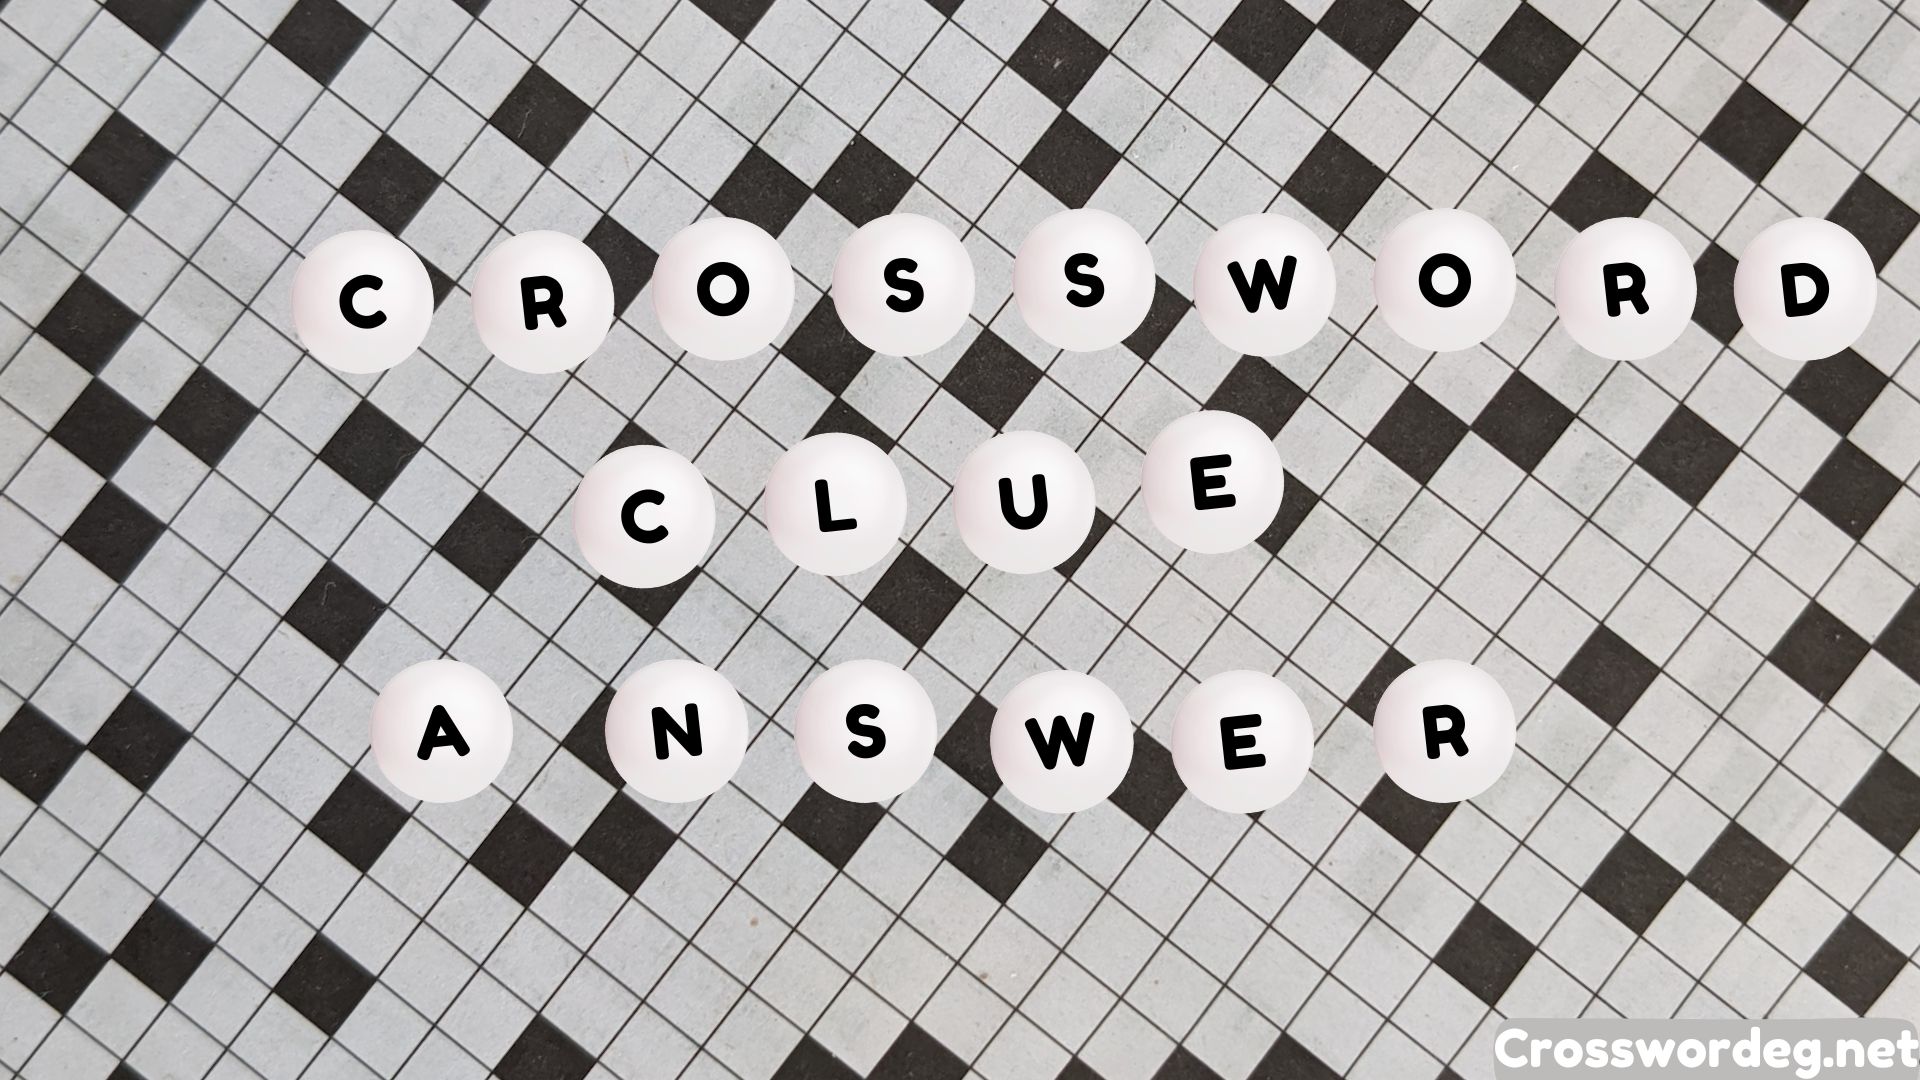 Pretend to have as a poker hand Crossword Clue Answers Crosswordeg net